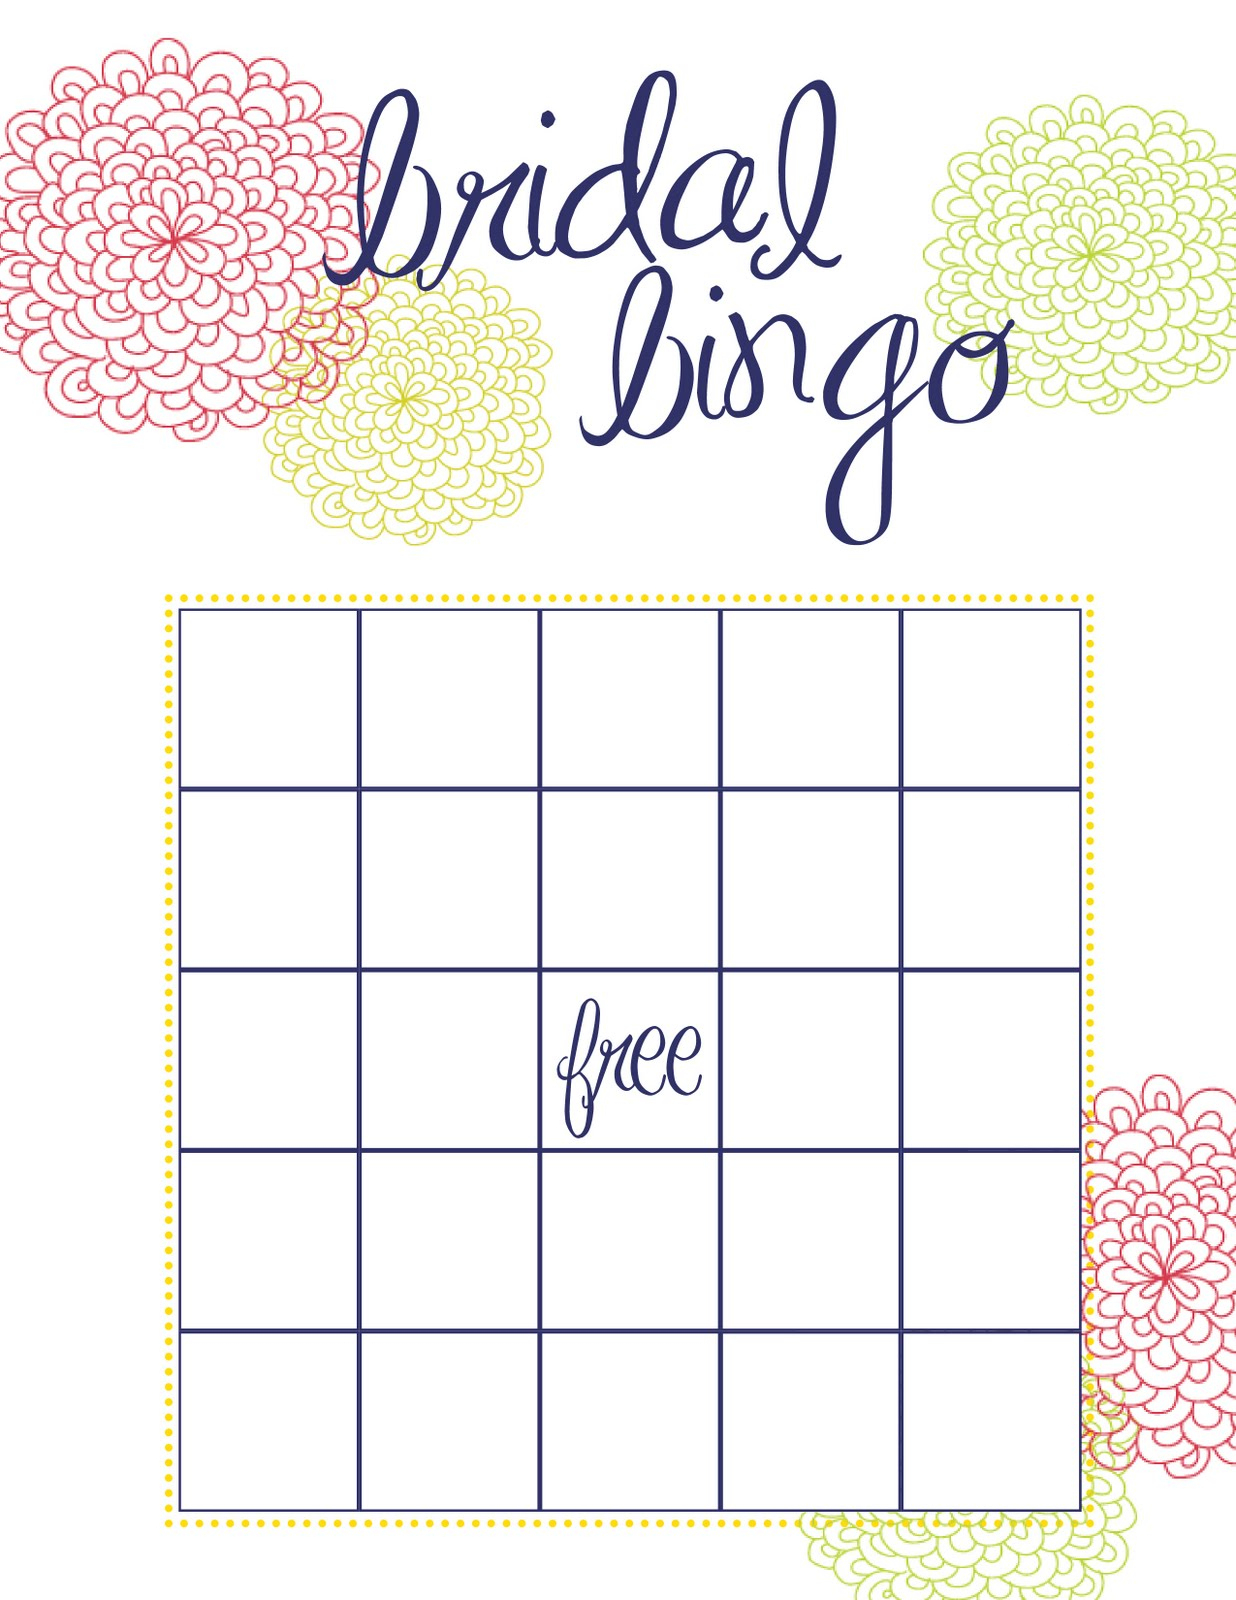 Free Printable Bridal Shower Bingo - Image Cabinets And Shower - Free Printable Bridal Shower Bingo